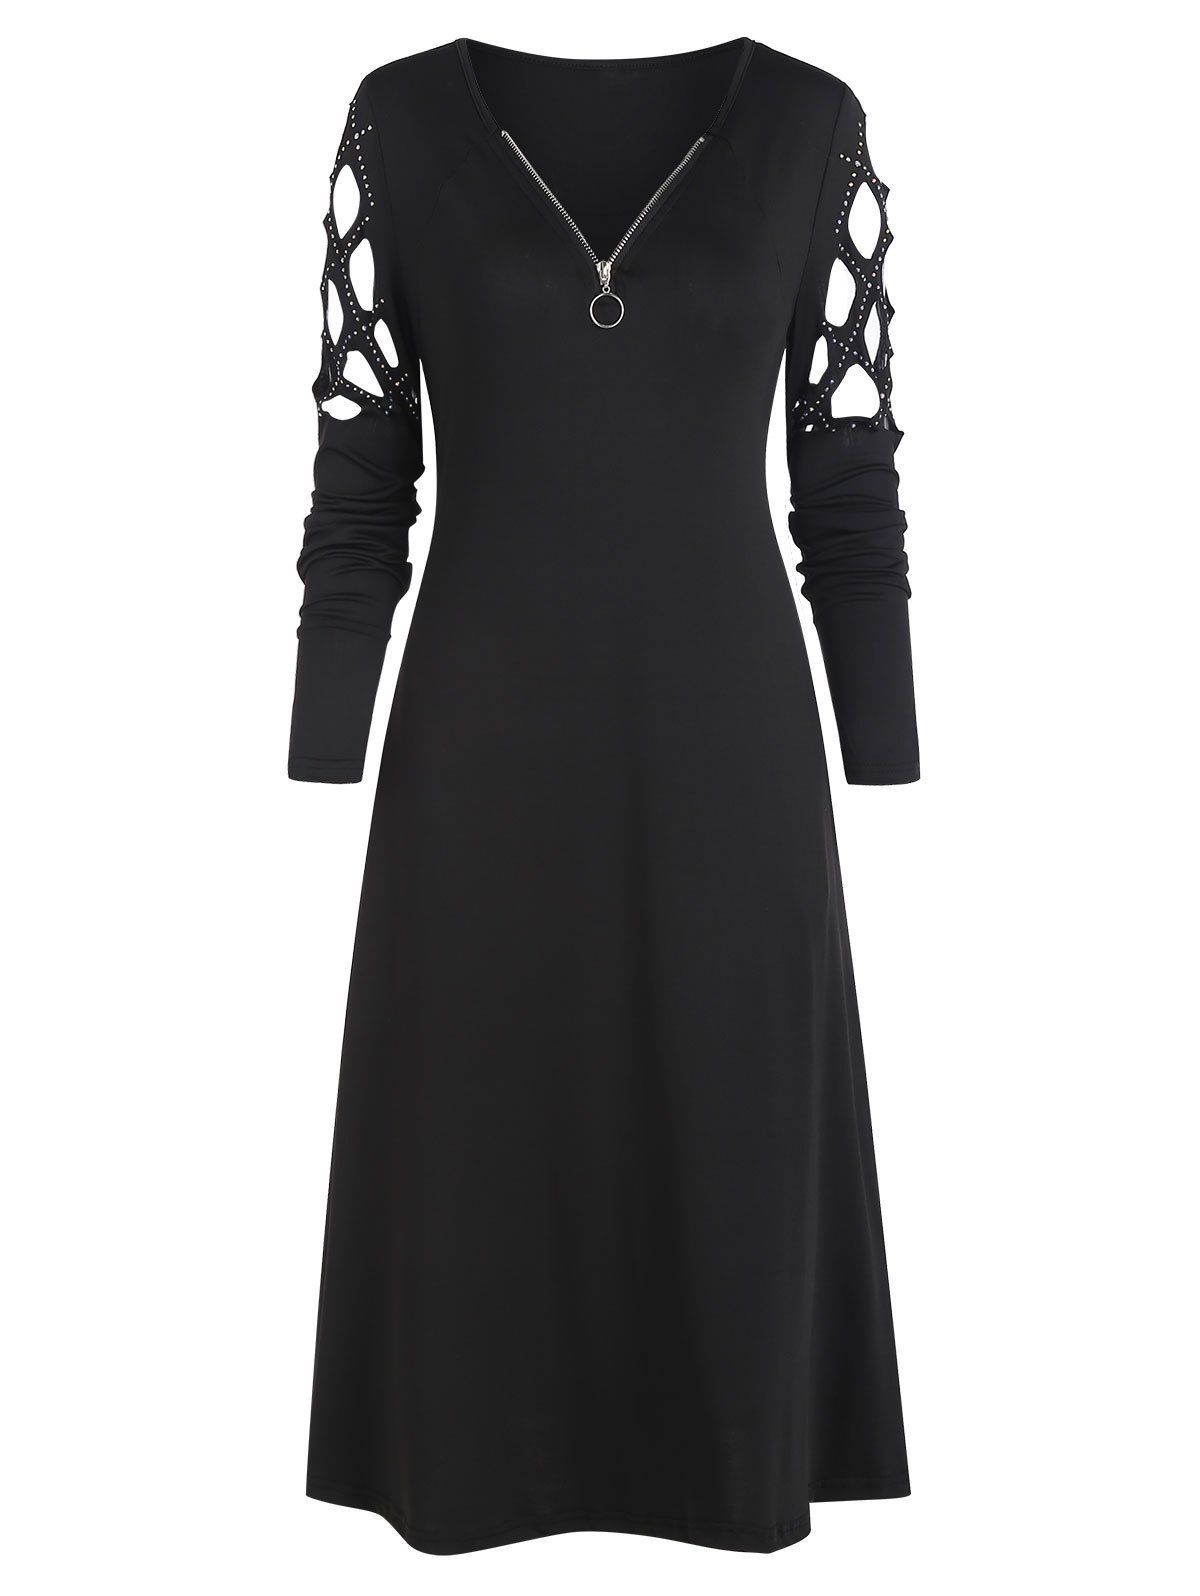 Rhinestone Caged Sleeve O Ring Zip Dress - BLACK S